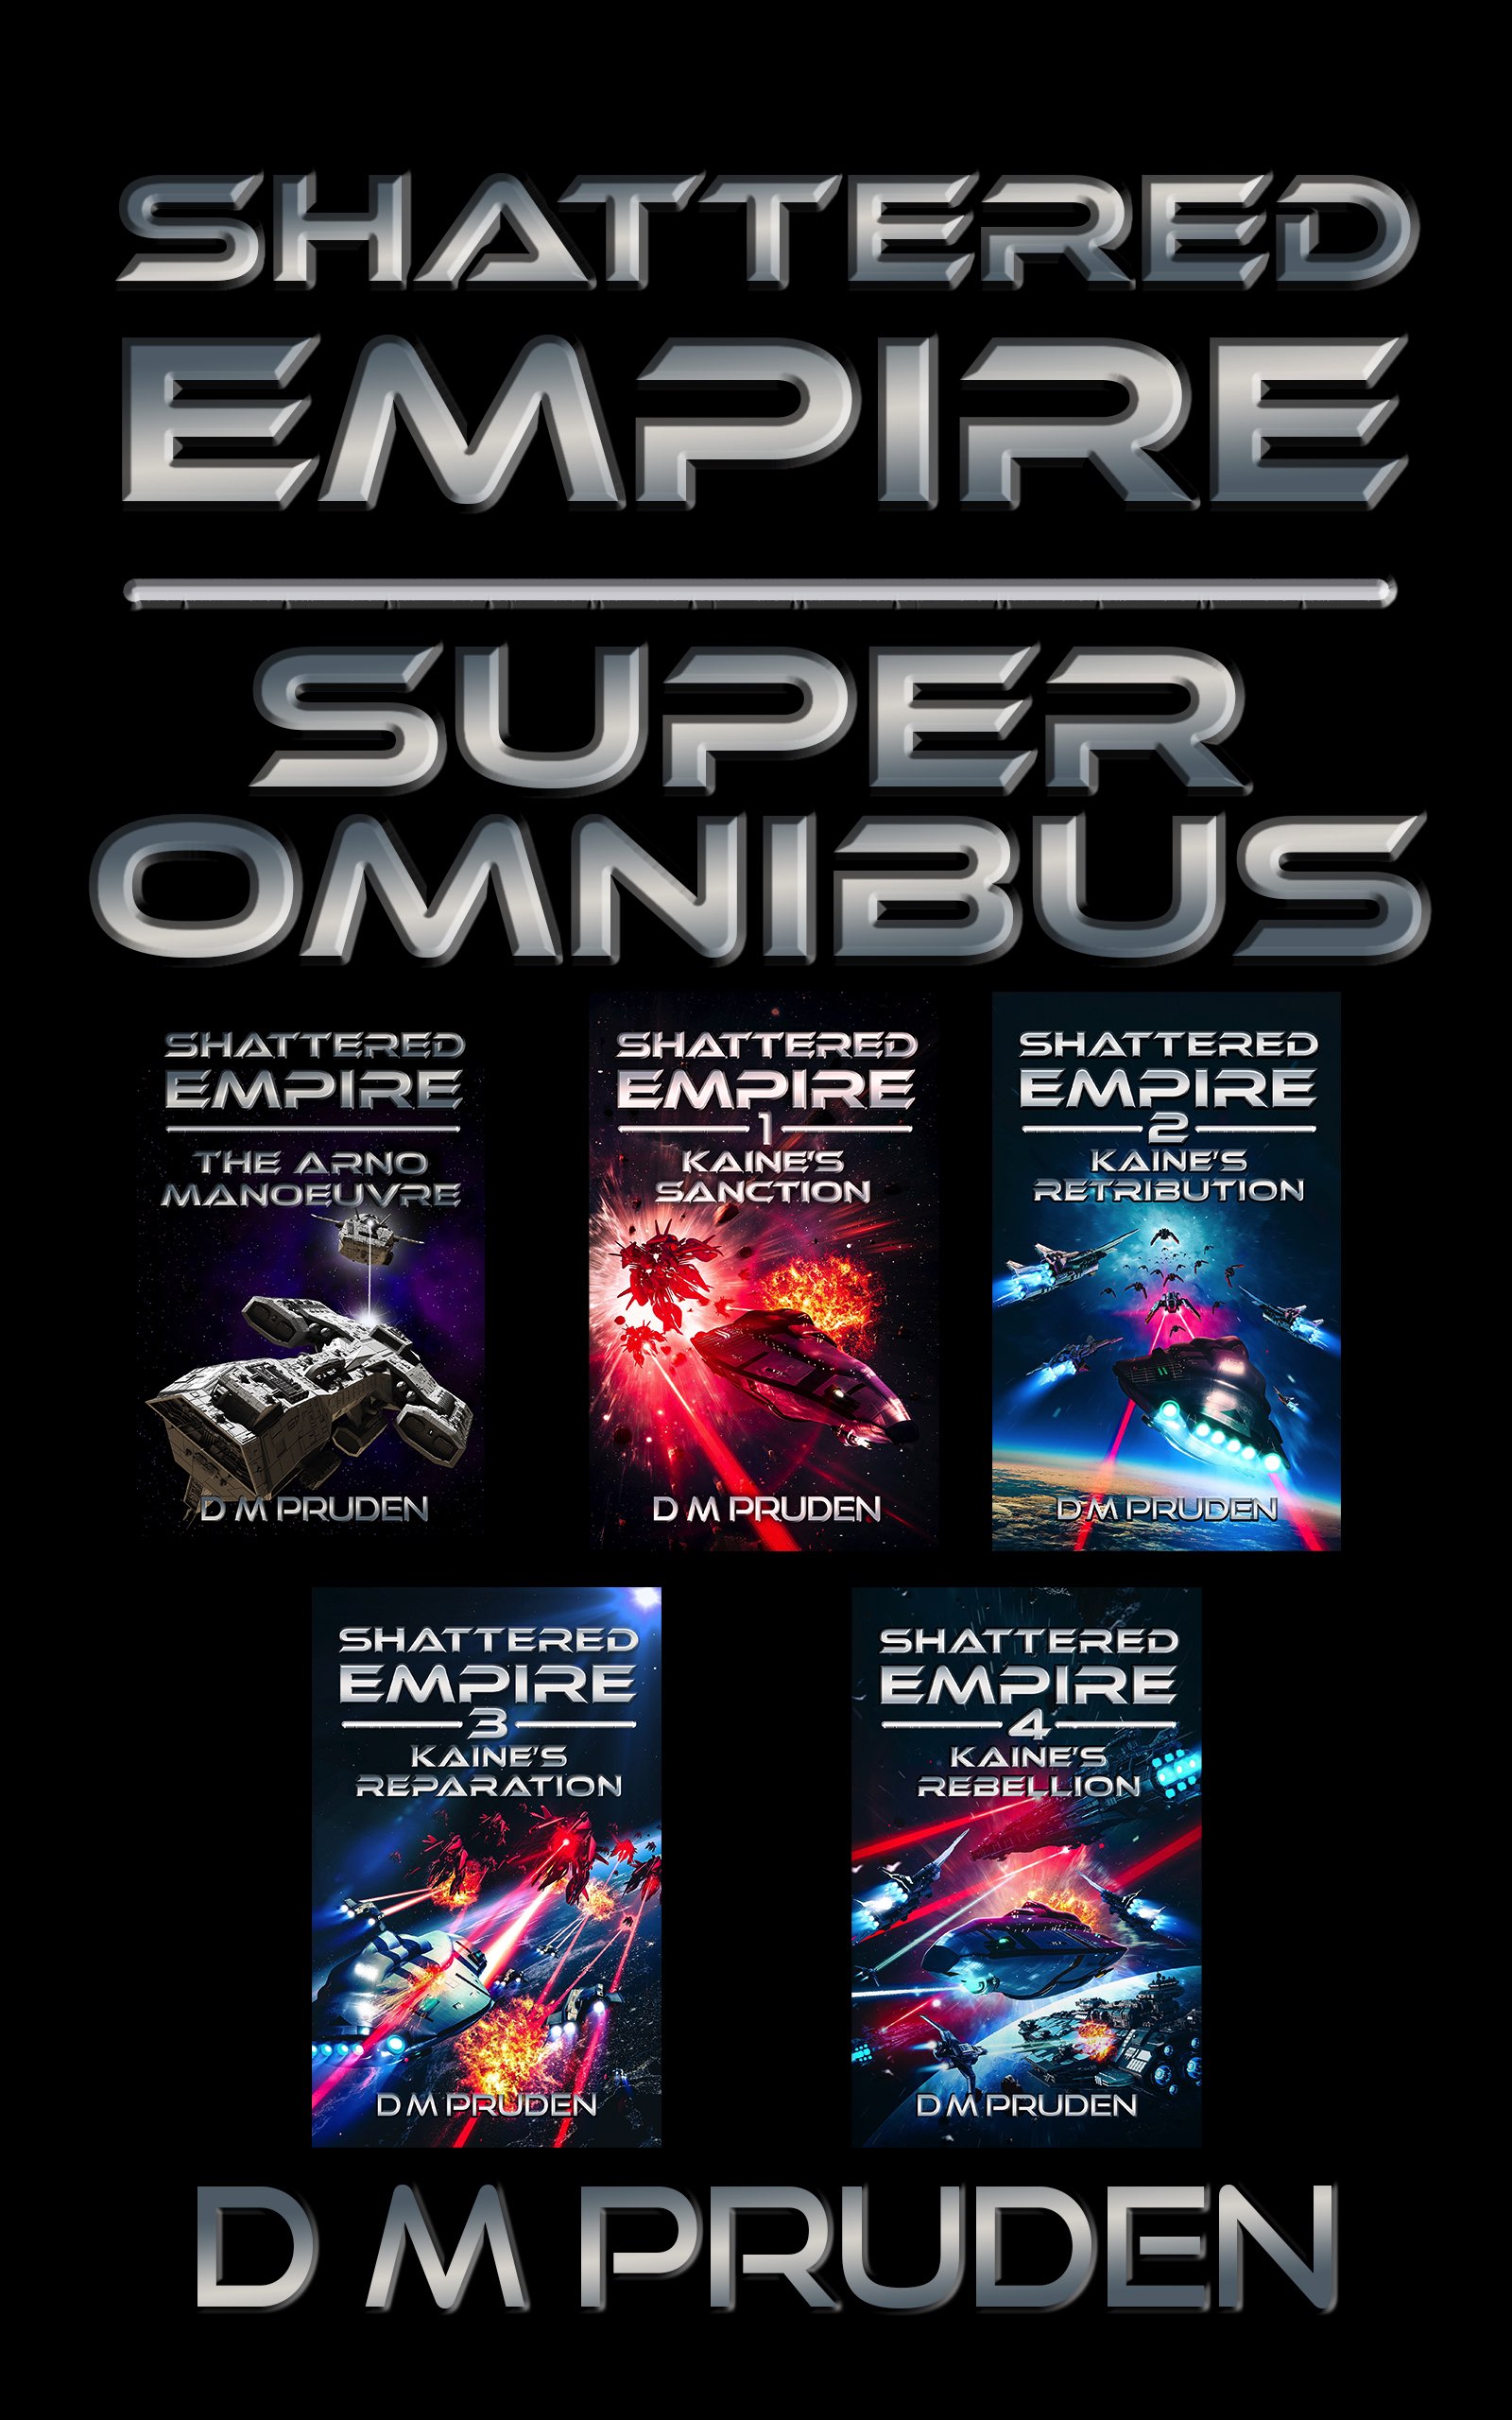 Shattered Empire Super Omnibus edition